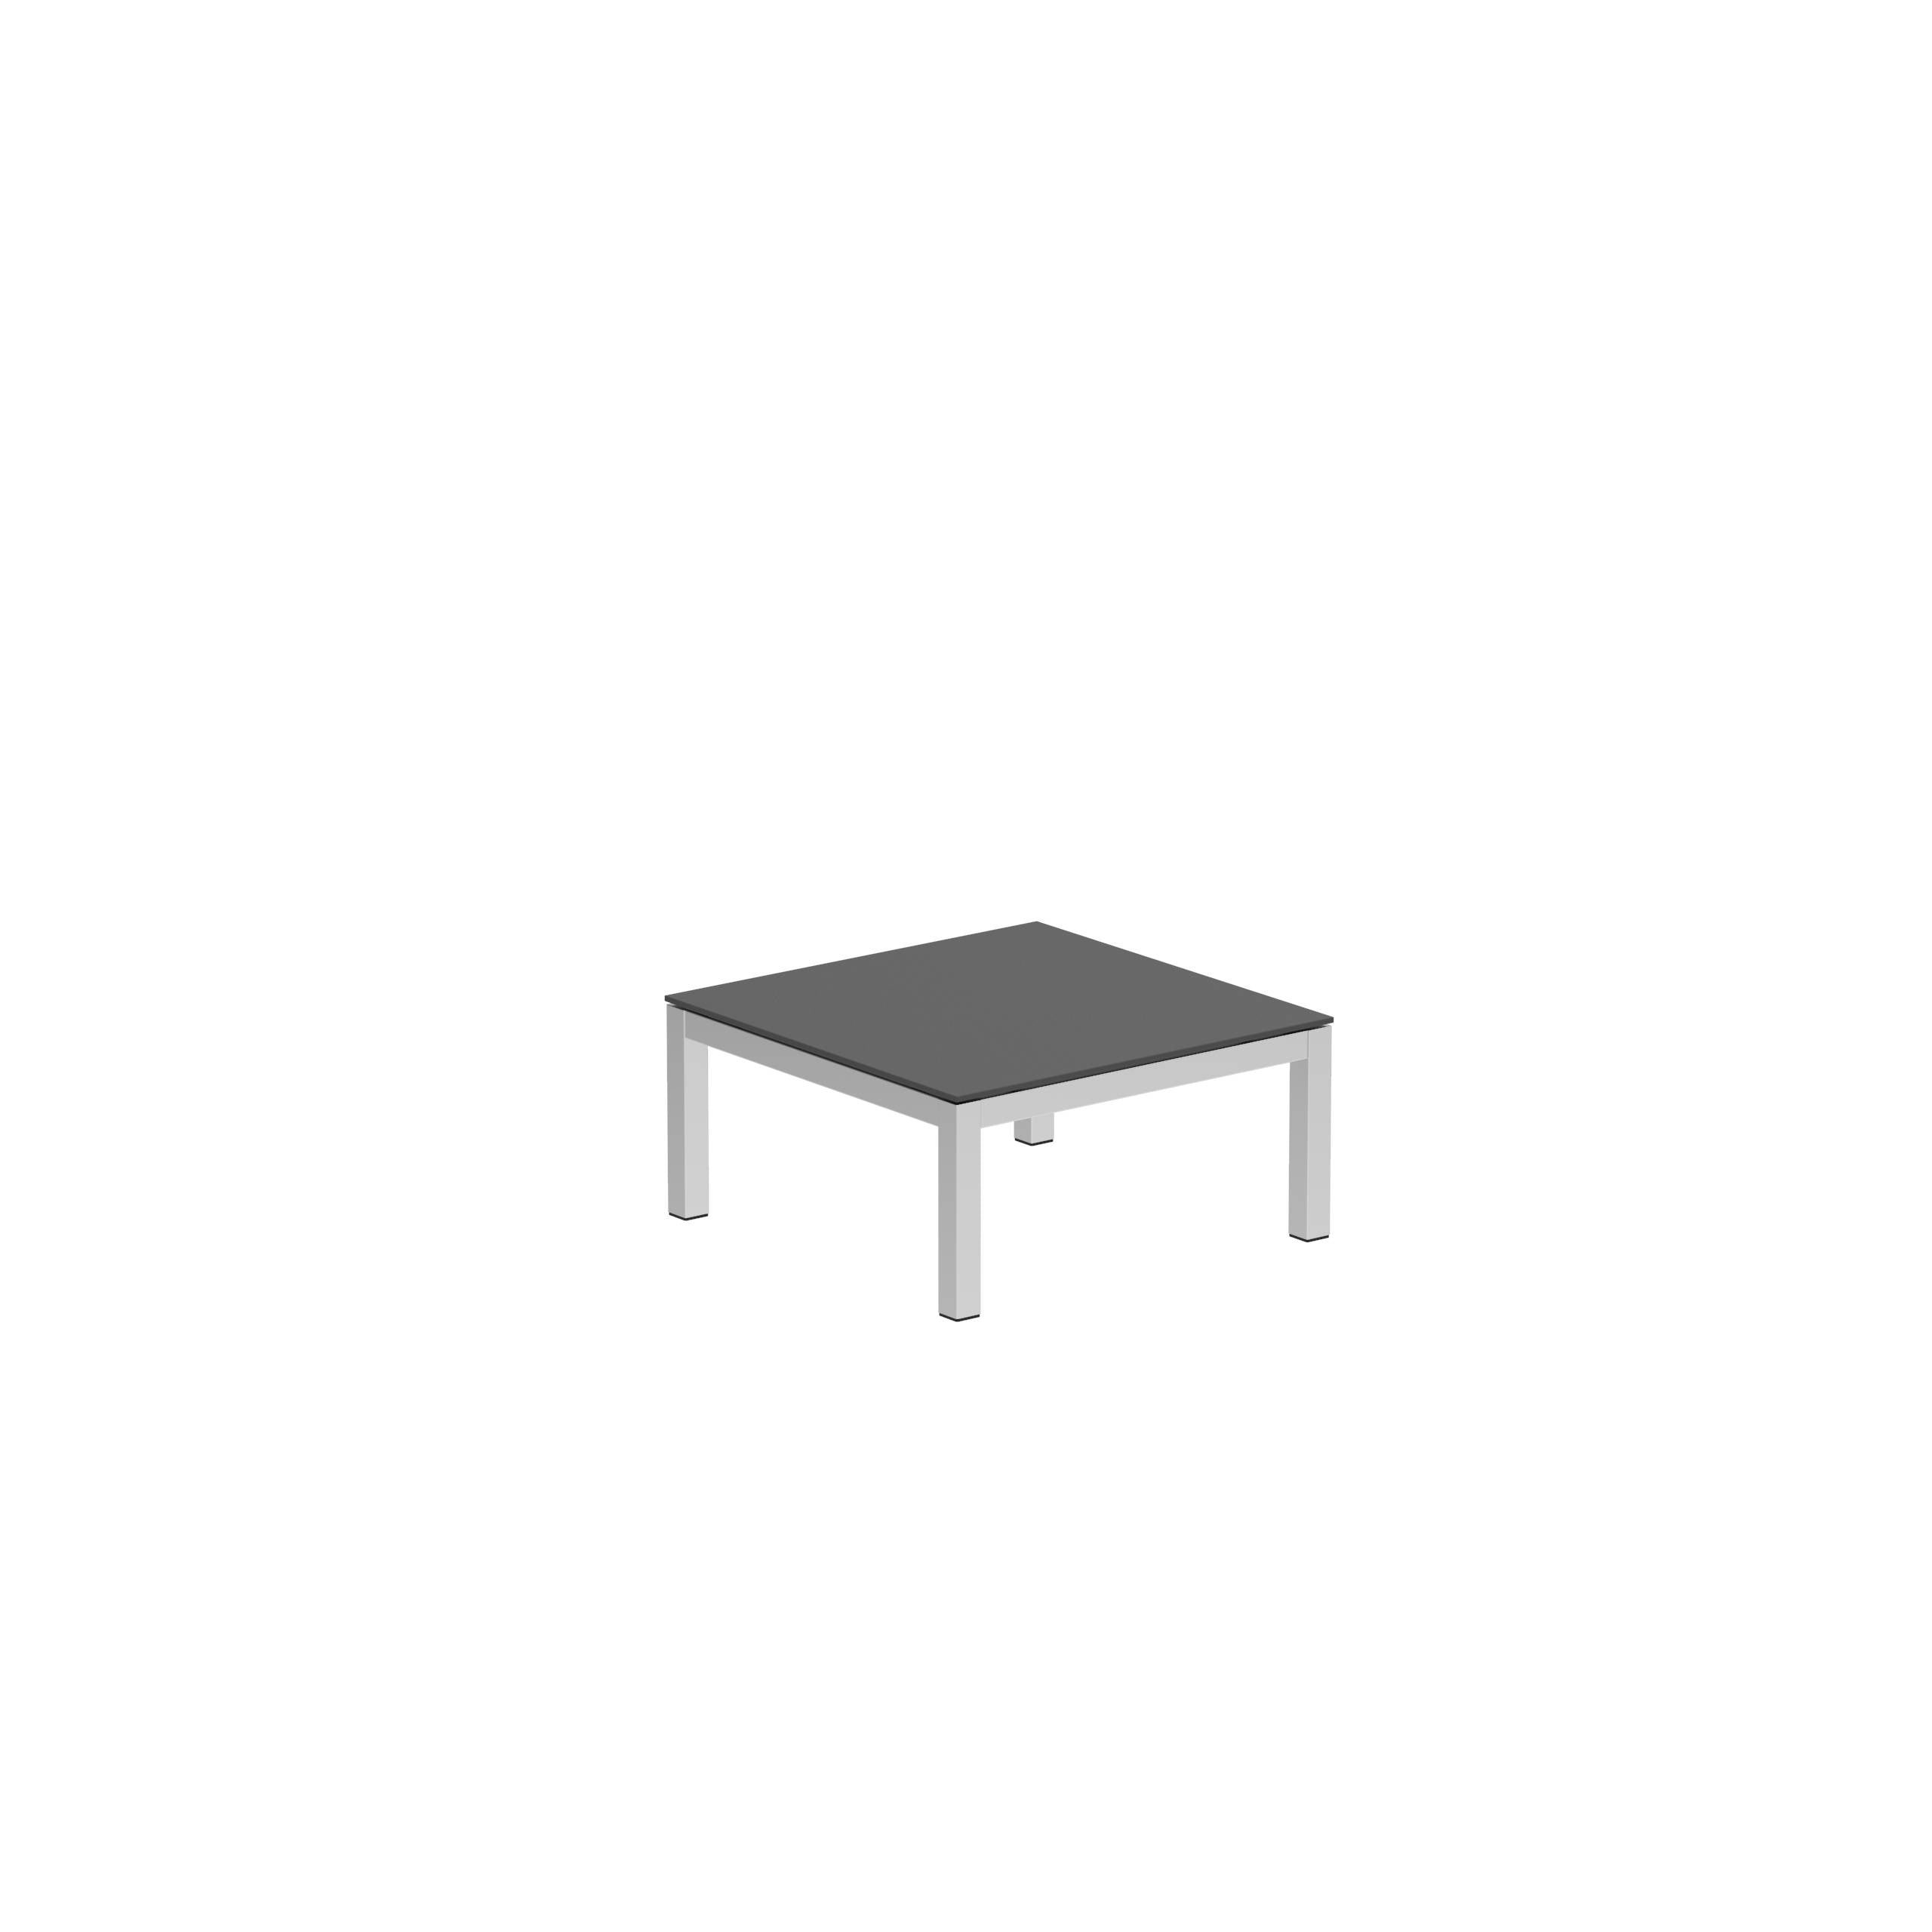 Taboela Low Table 80x80cm Ep + Ceramic Top Black